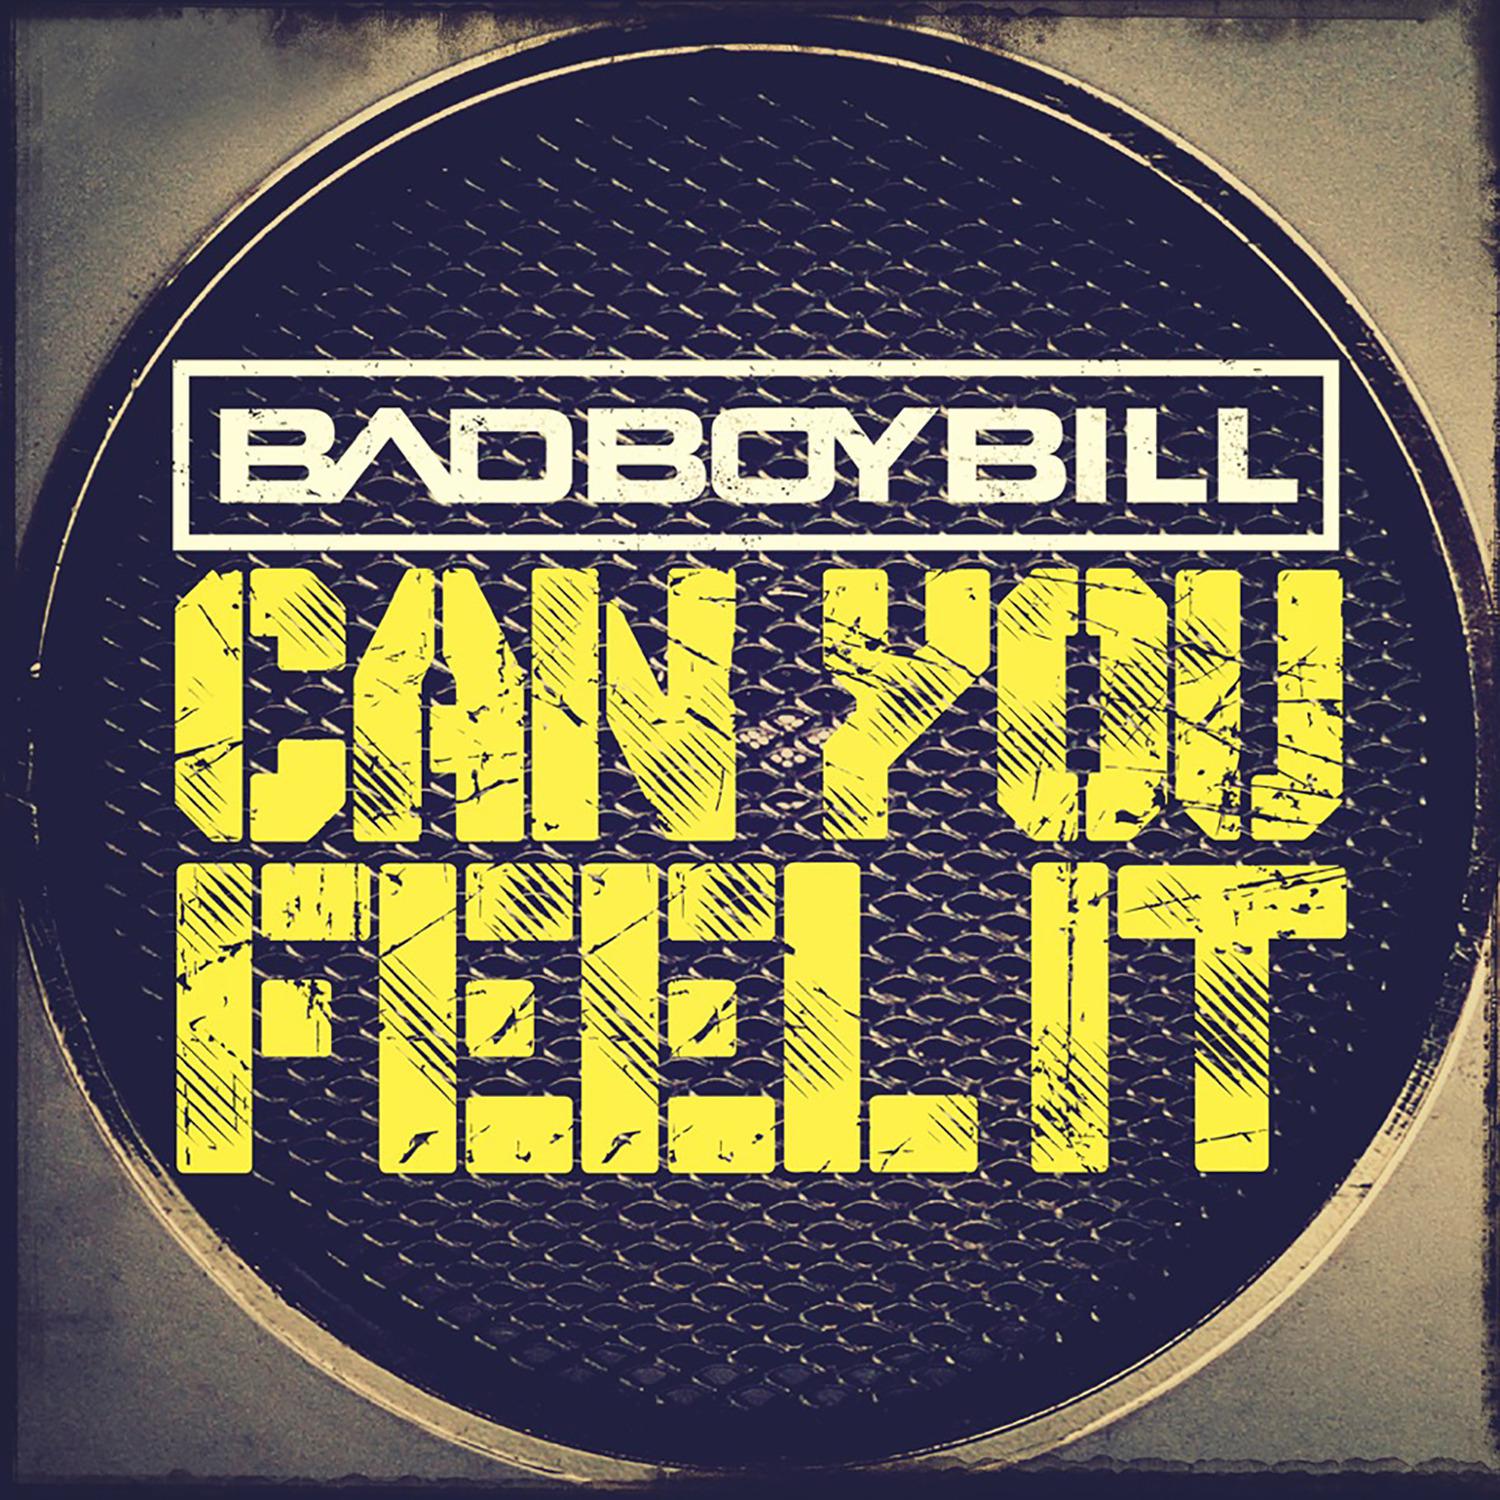 Bad Boy Bill - Can You Feel It (Remix)